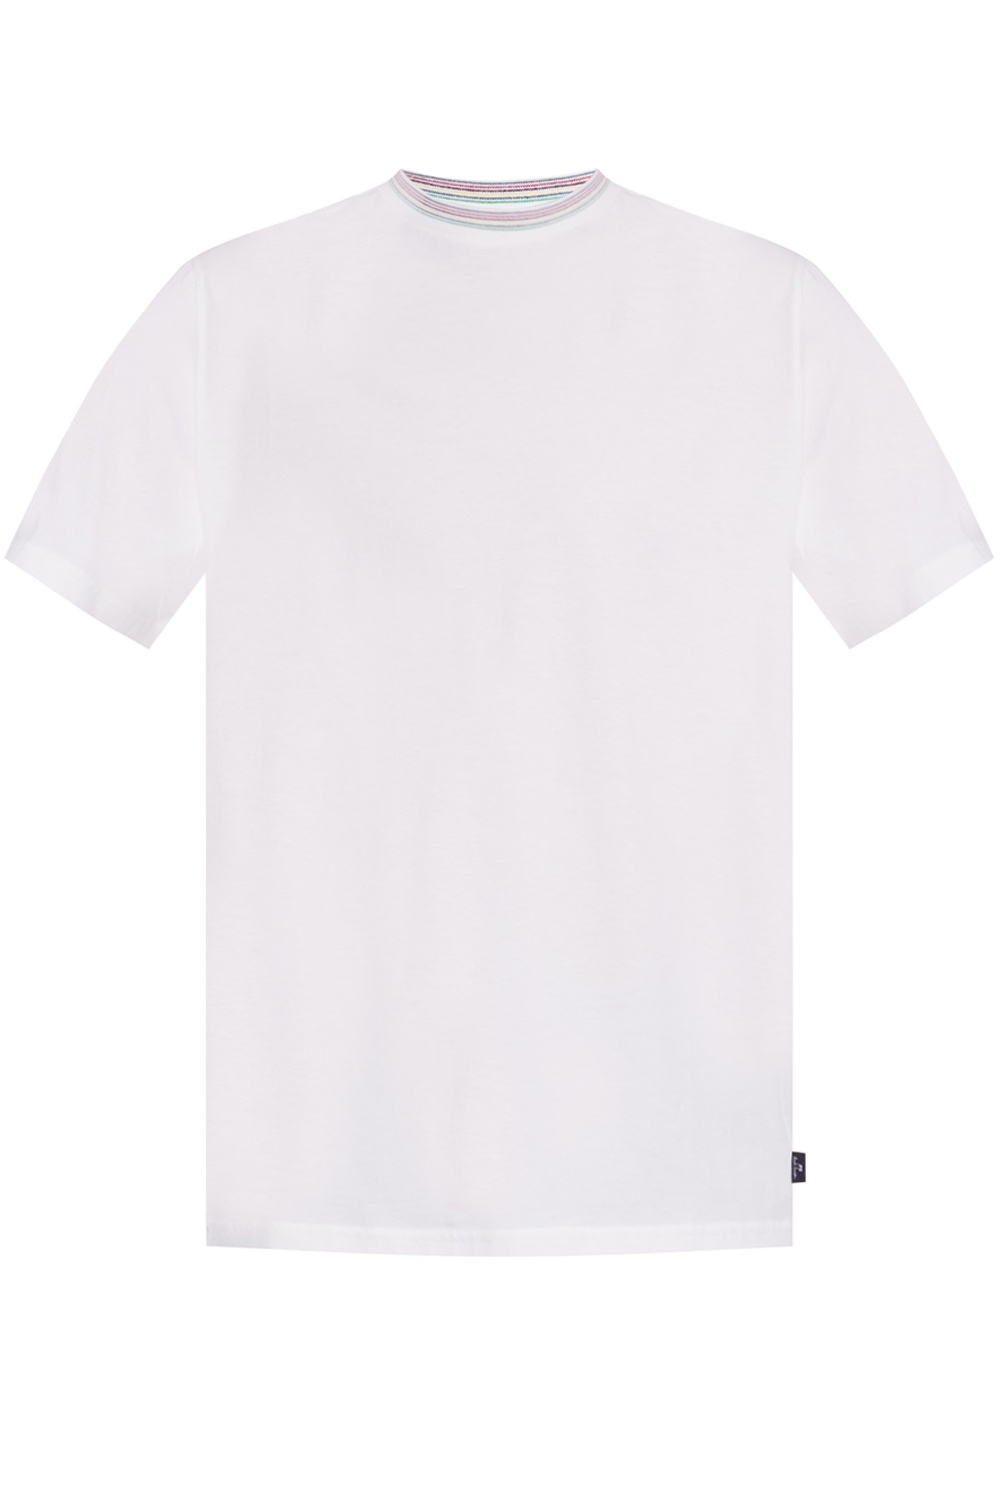 Men's Clothing - Tee shirt vertbaudet | shirt with decorative neck